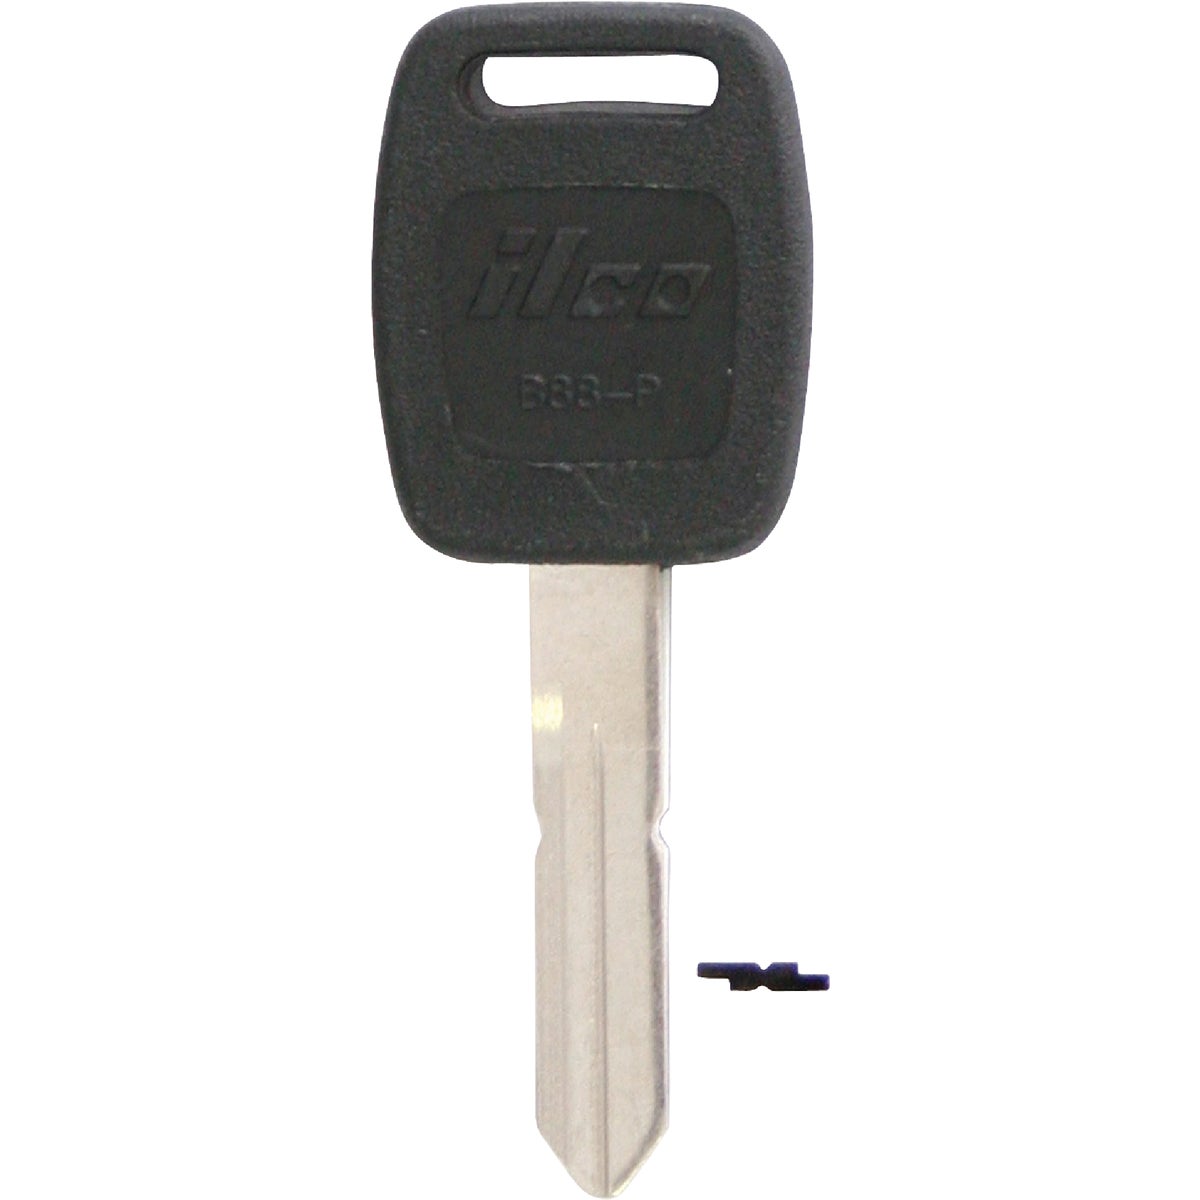 ILCO GM Nickel Plated Automotive Key, B88-P / B88P (5-Pack)